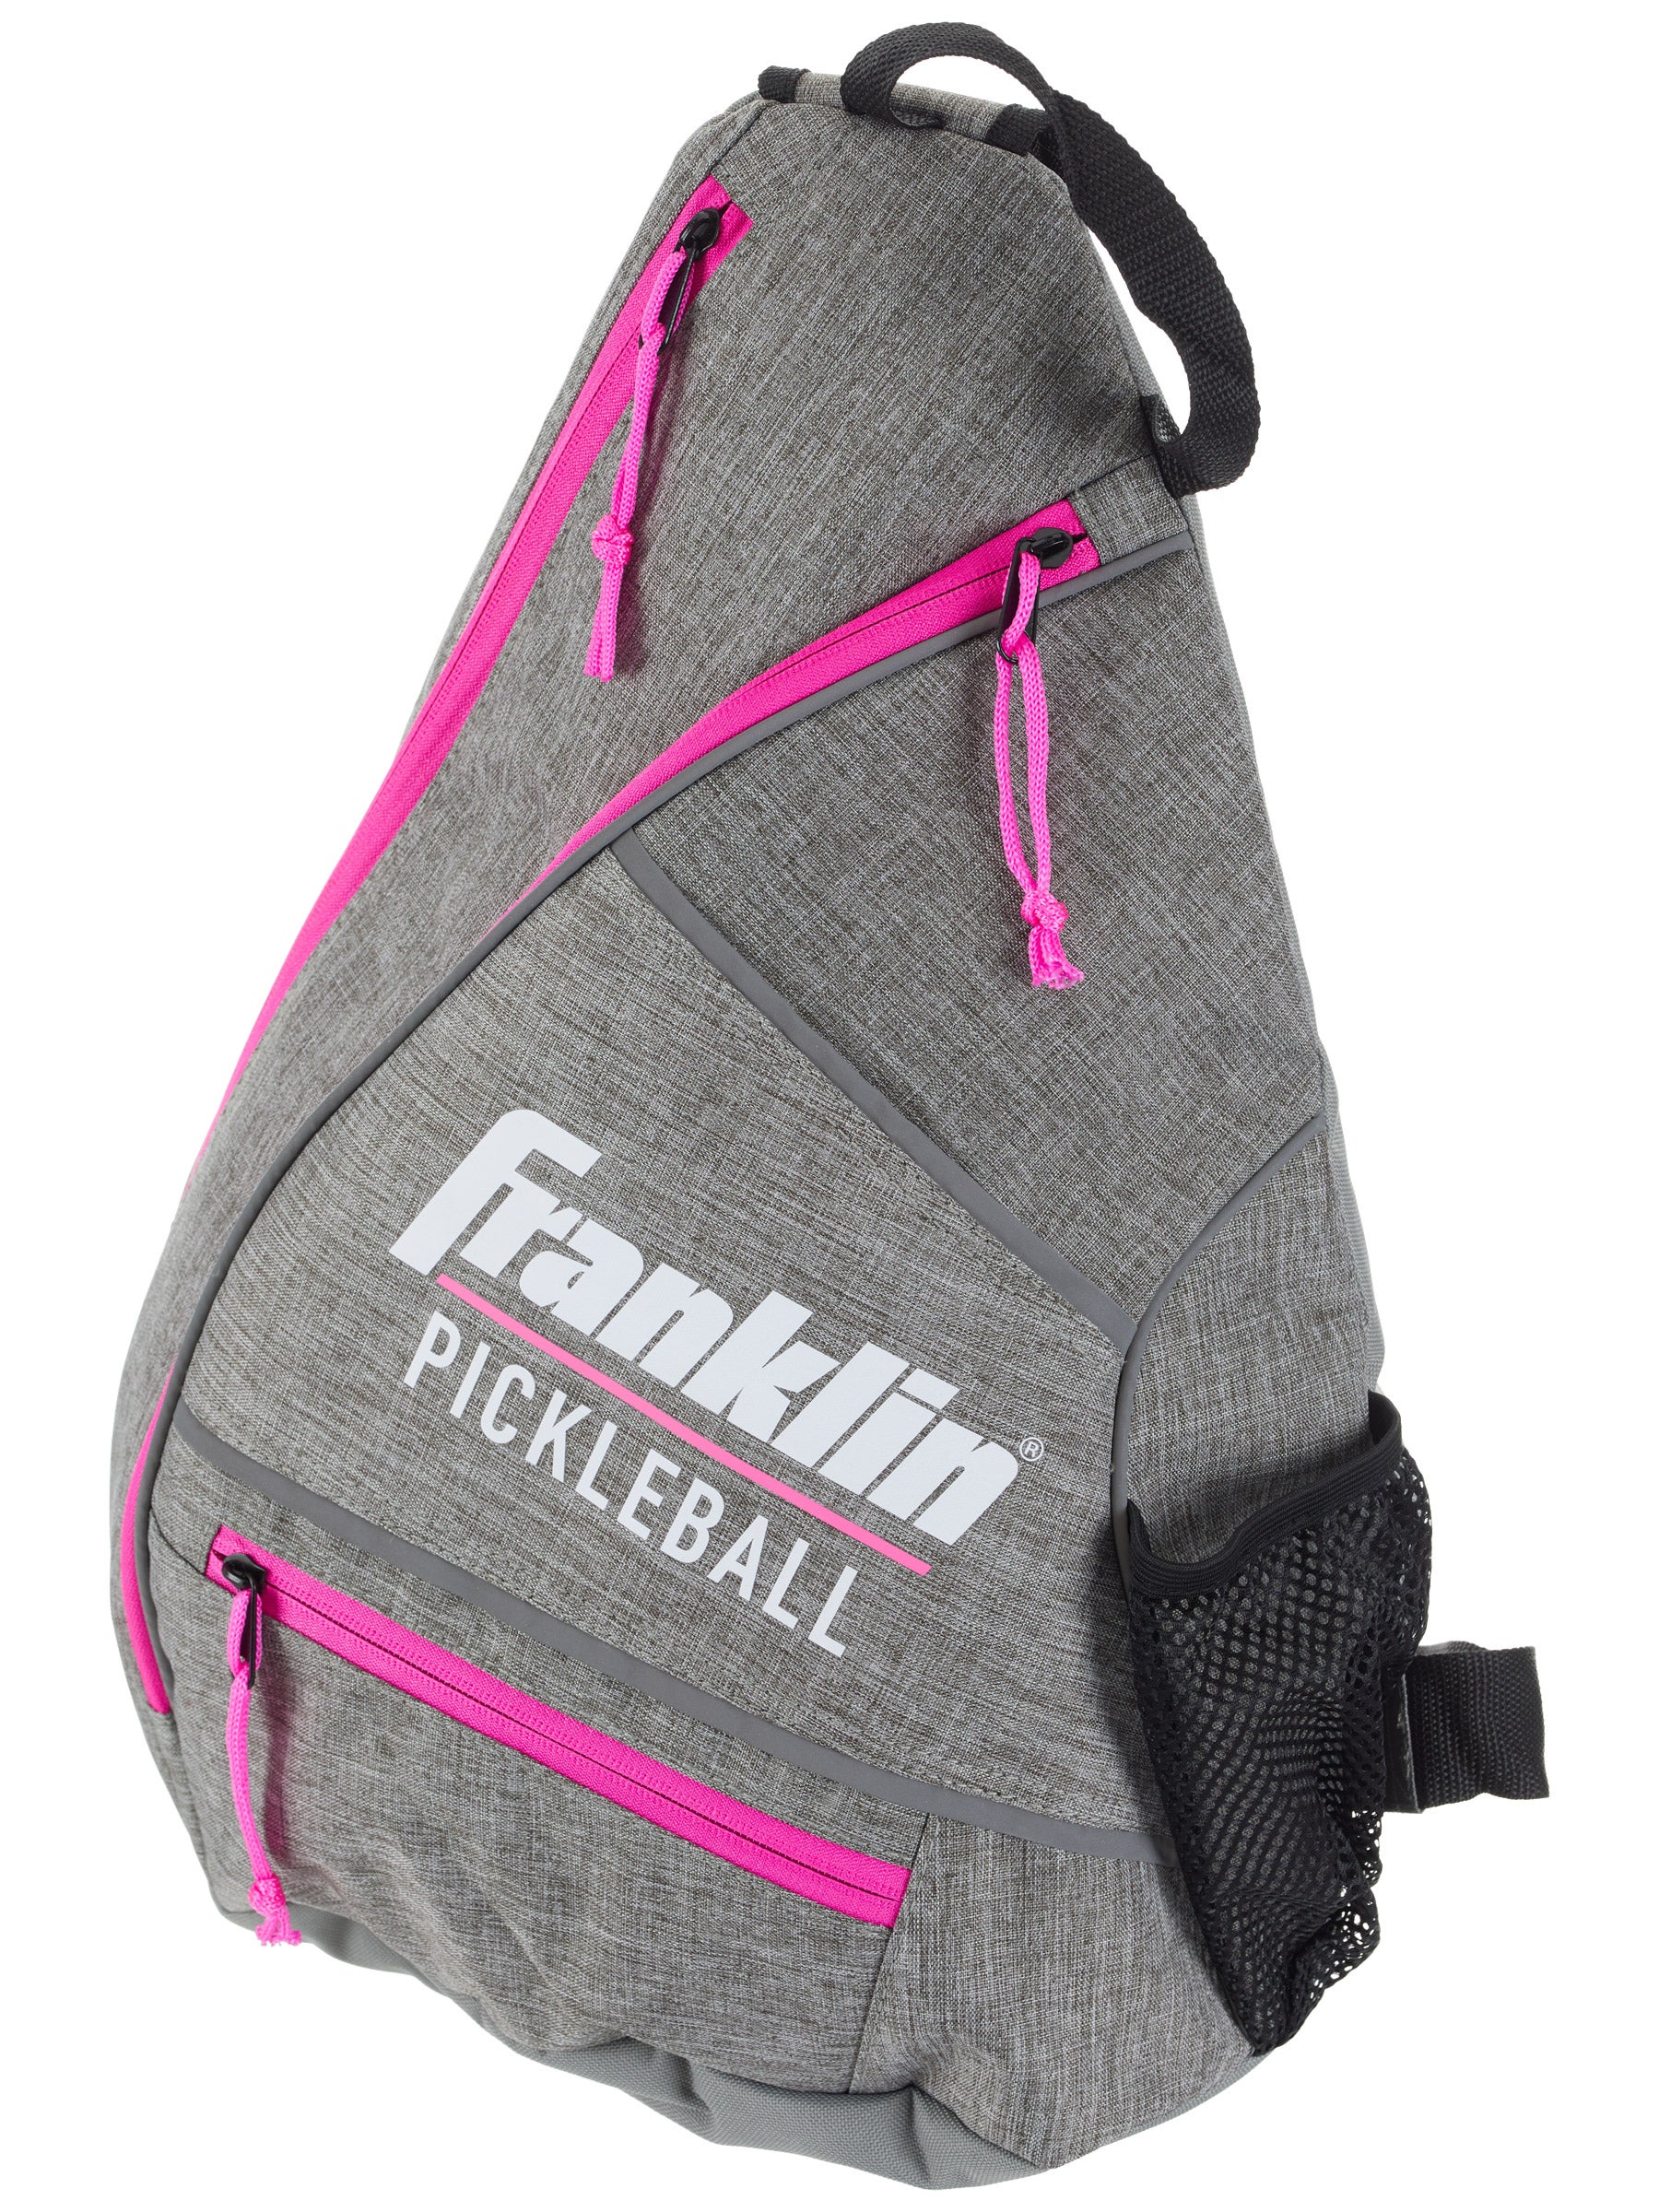 Franklin Sports 52823C1 Pickleball Sling Bag With Padded Back and Pockets Pink for sale online 